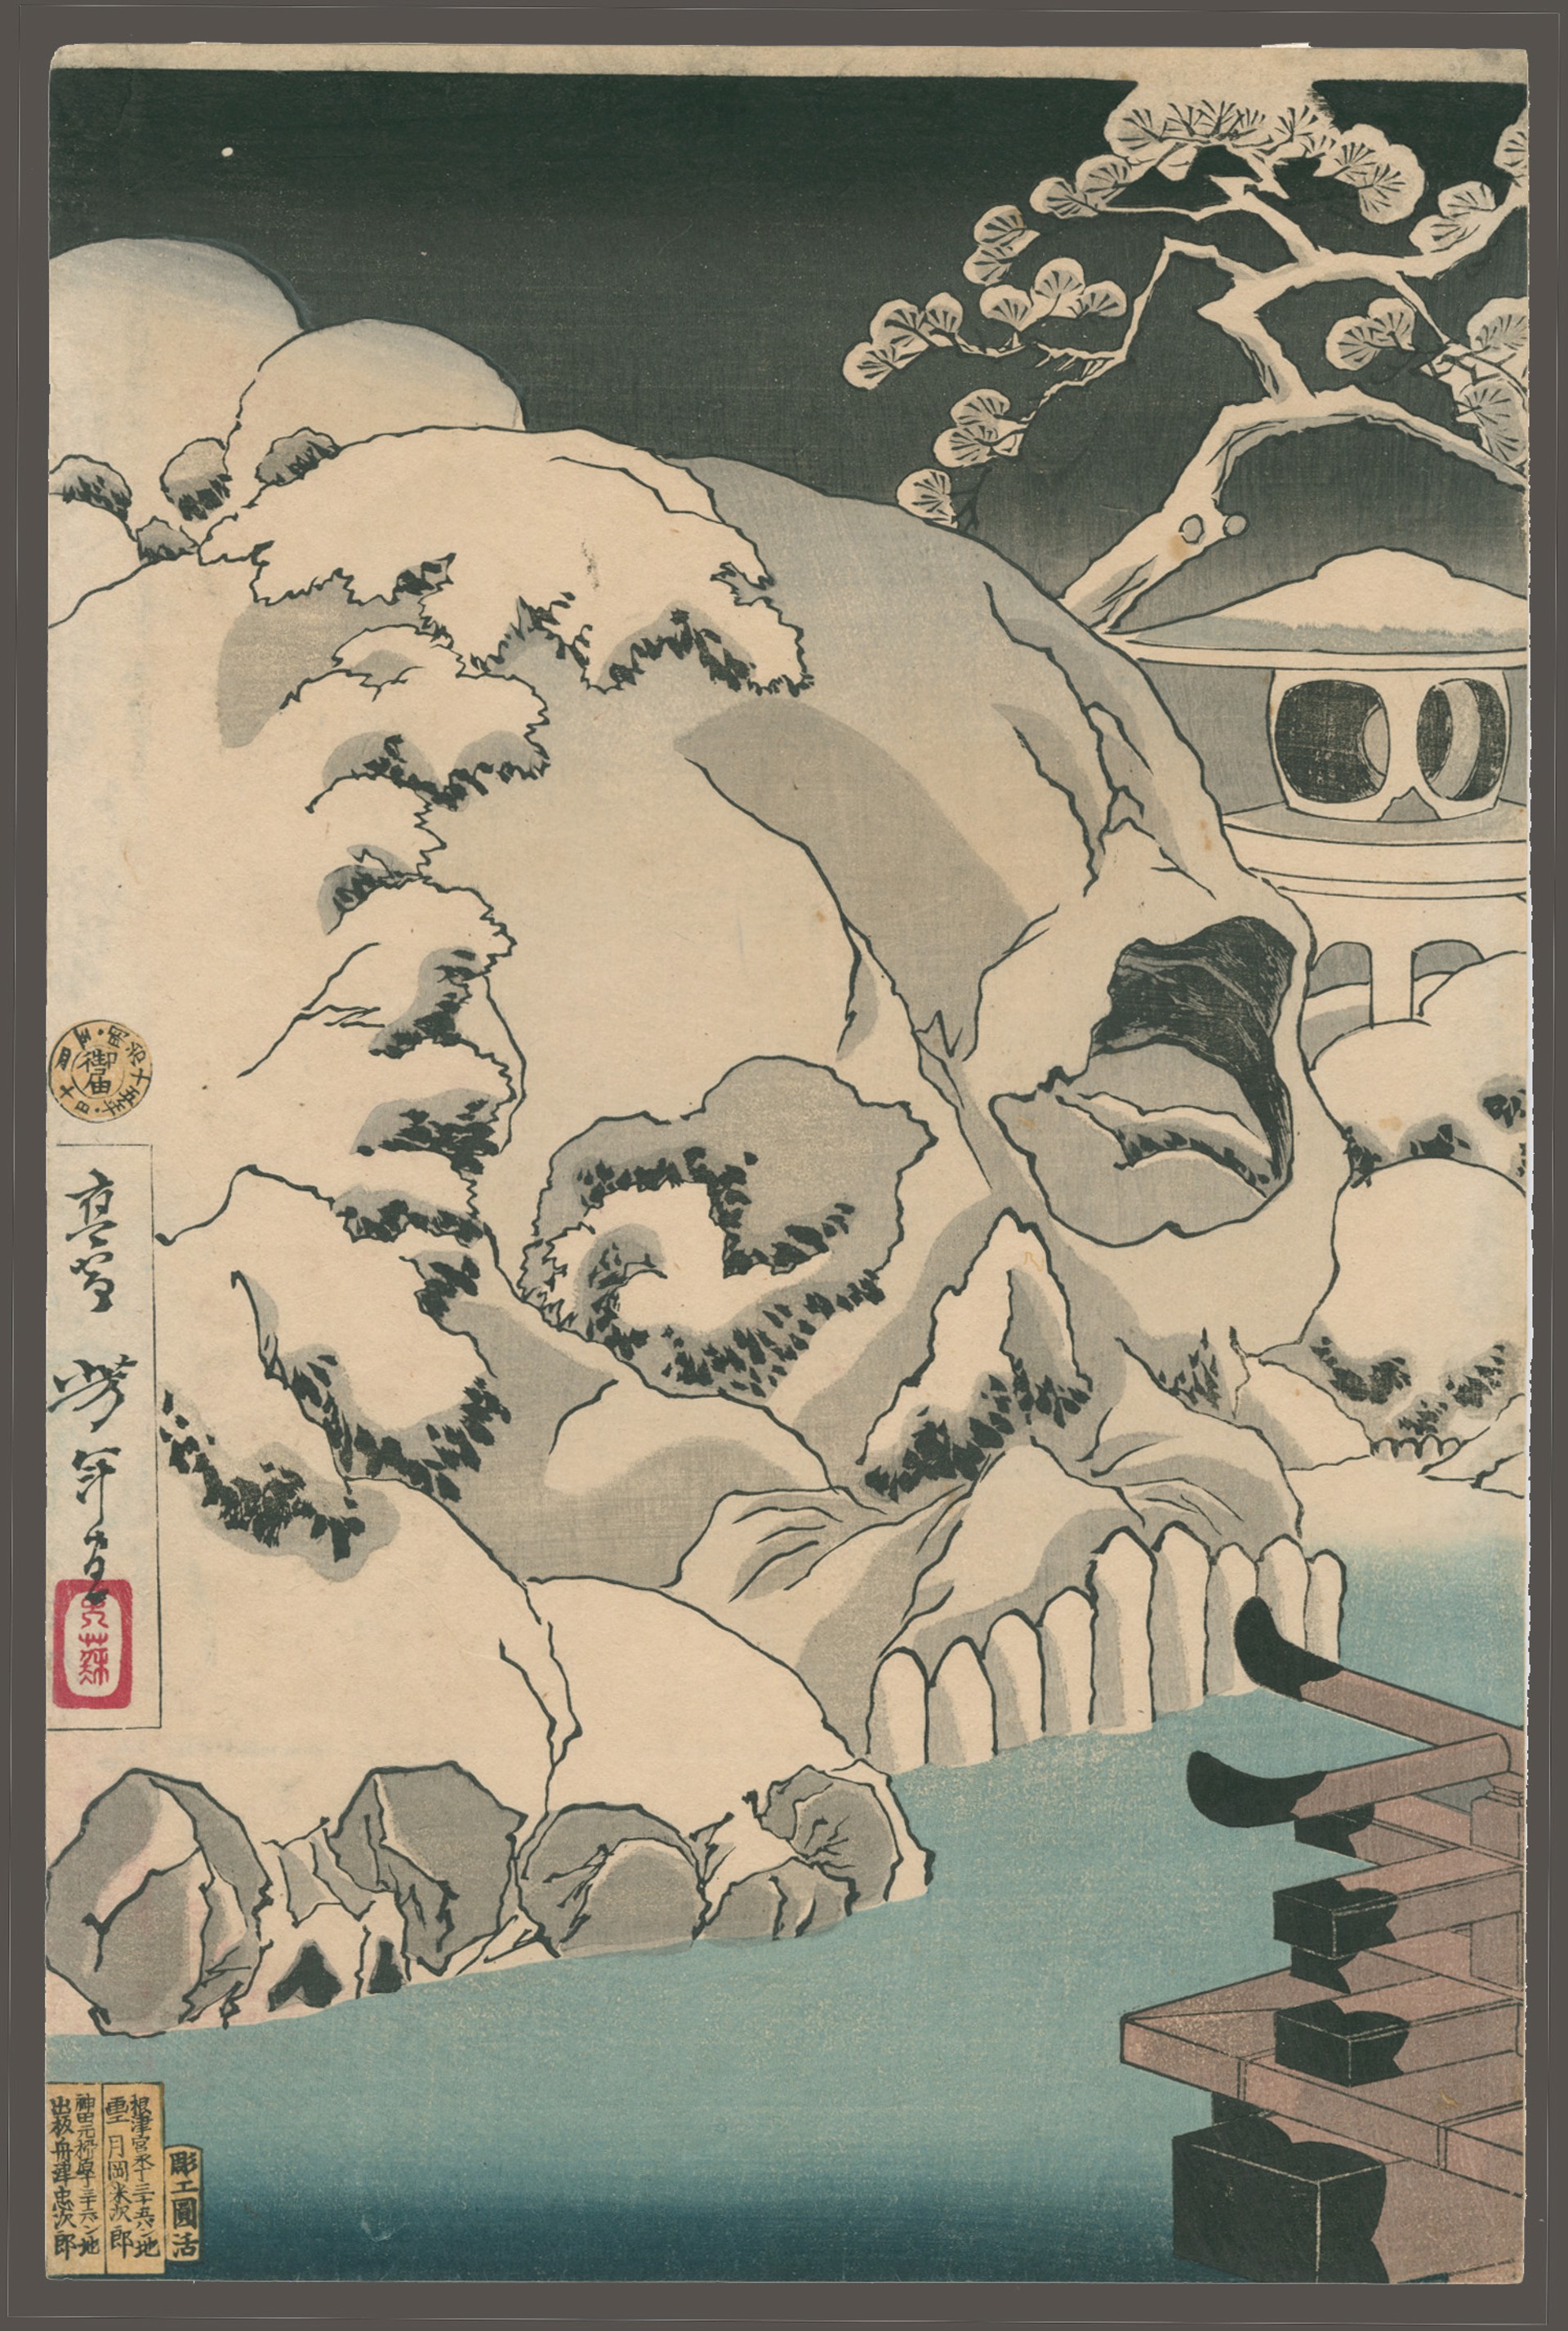 Taira no Kiyomori Seeing Hundreds of Skulls in the Snow covred Garden at Fukuhara Six New Monsters by Yoshitoshi